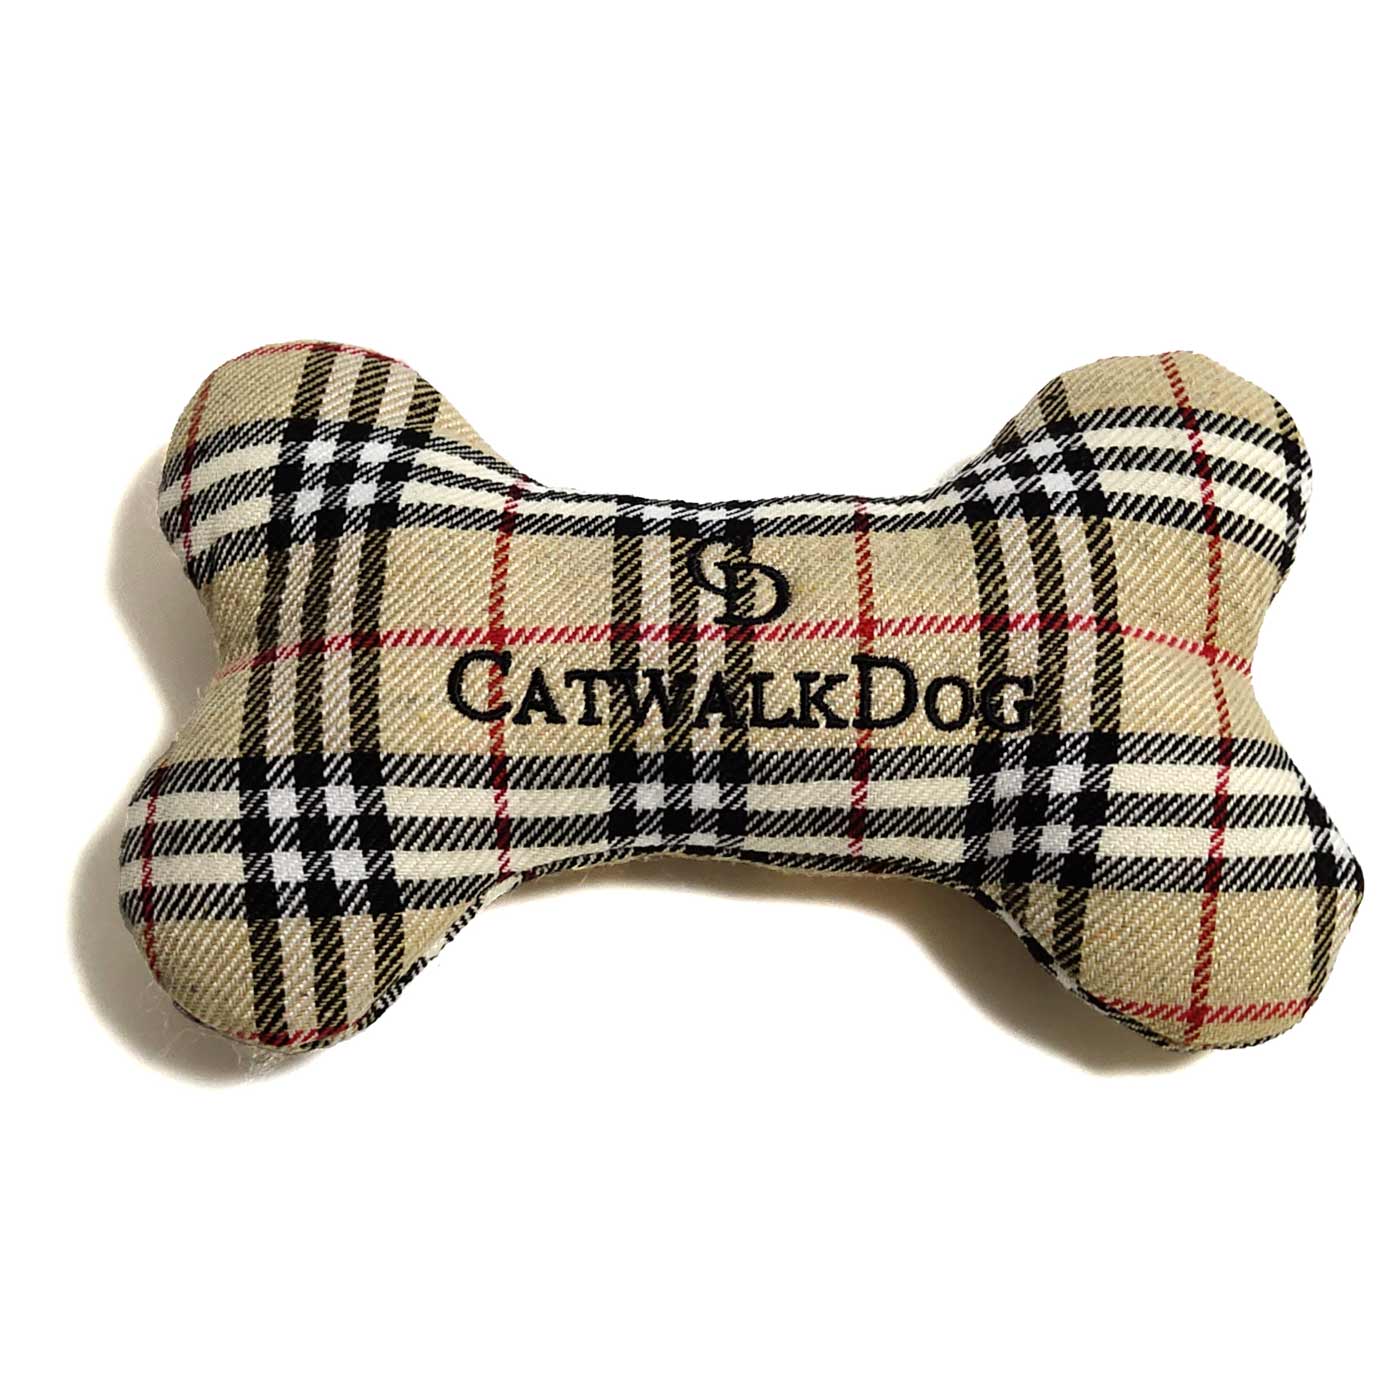 CatwalkDog Furberry Bone Dog Toy